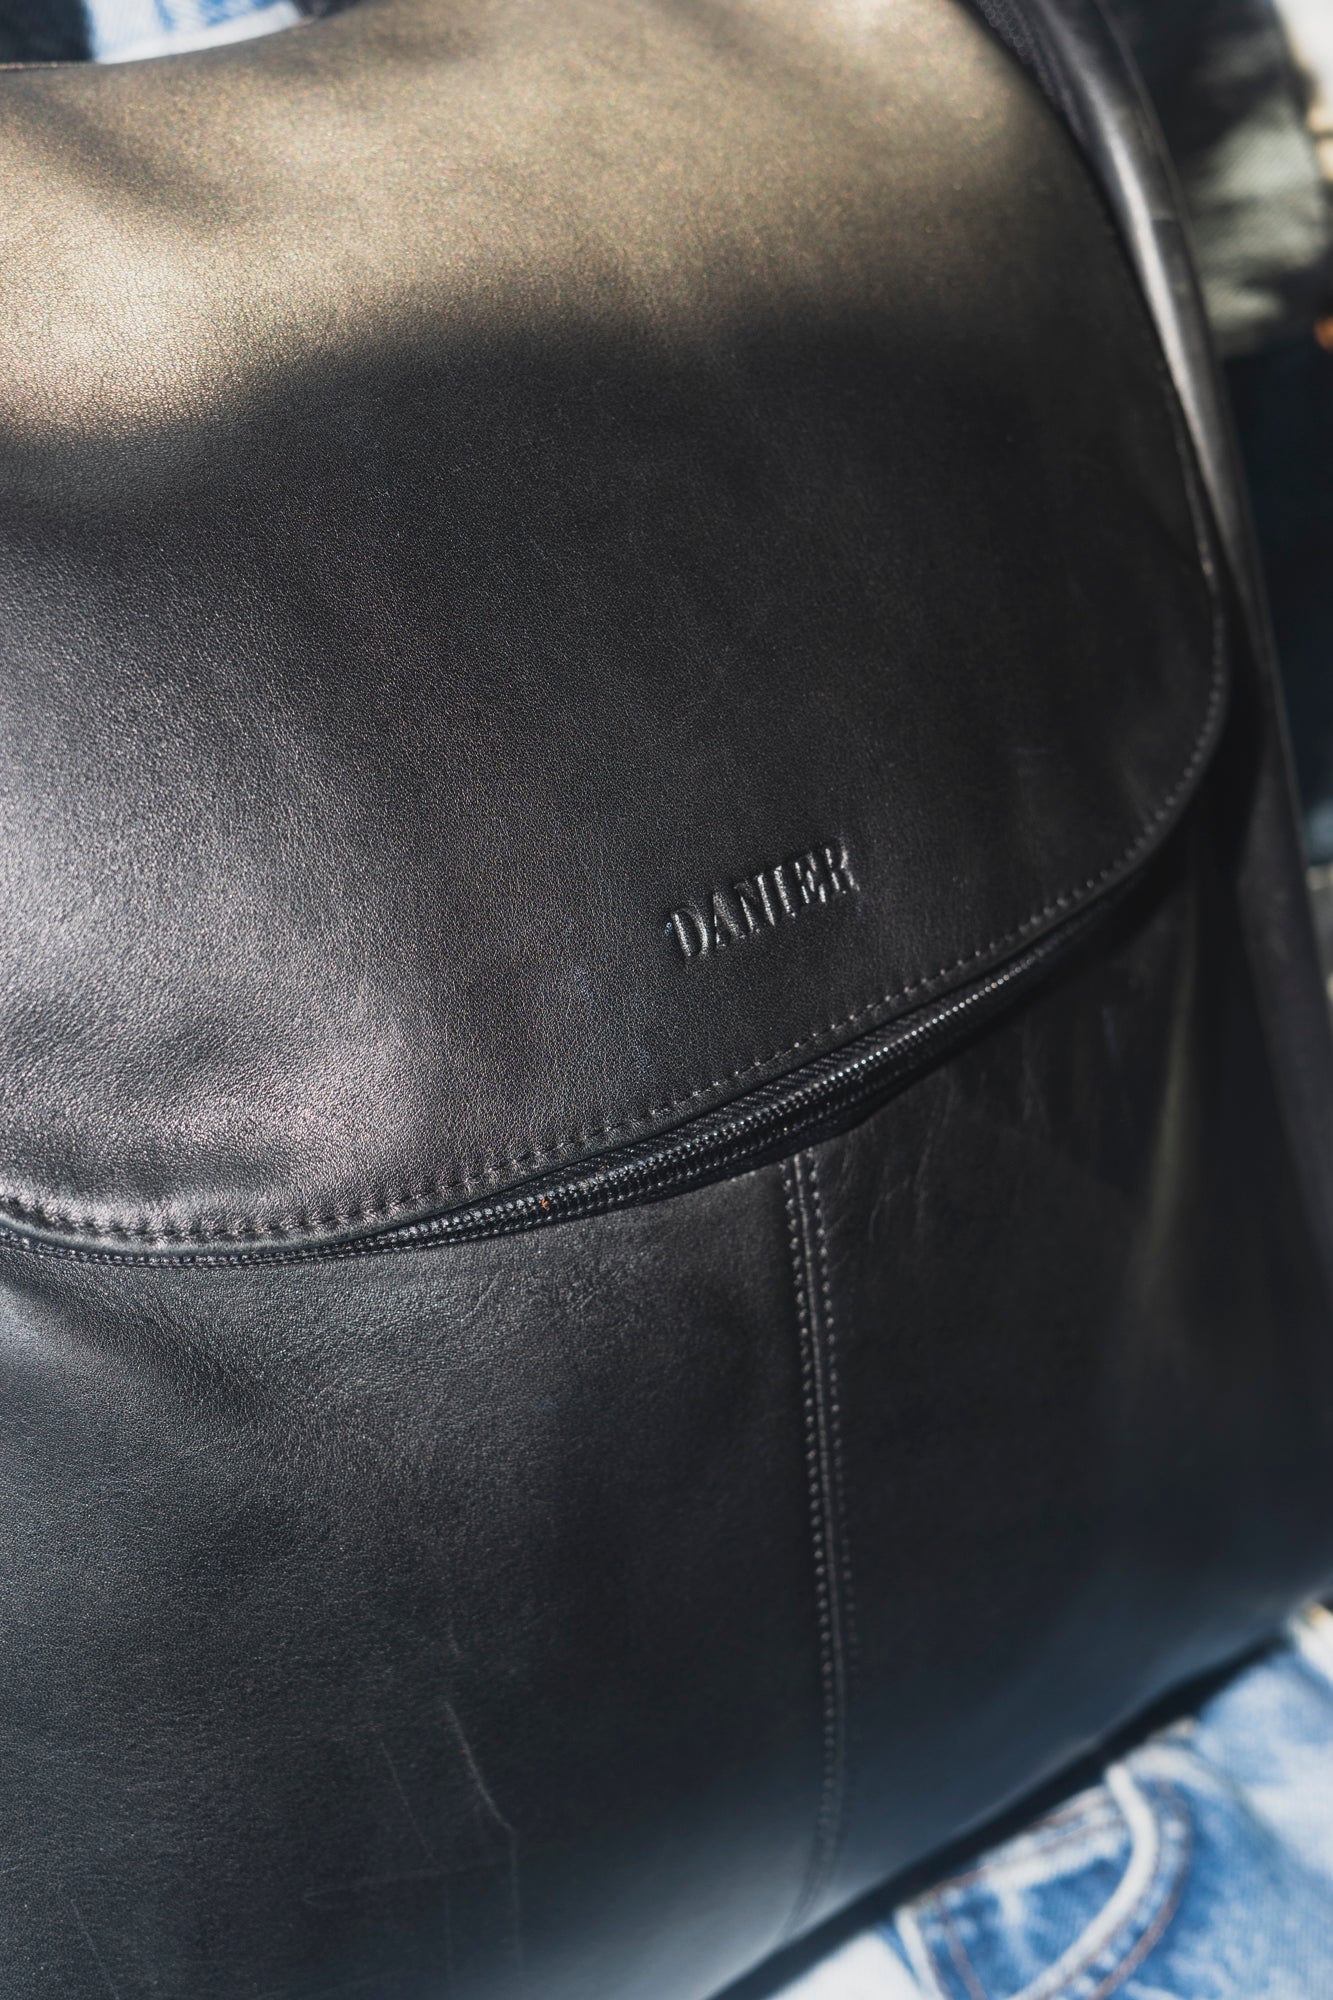 Danier Black Leather Backpack